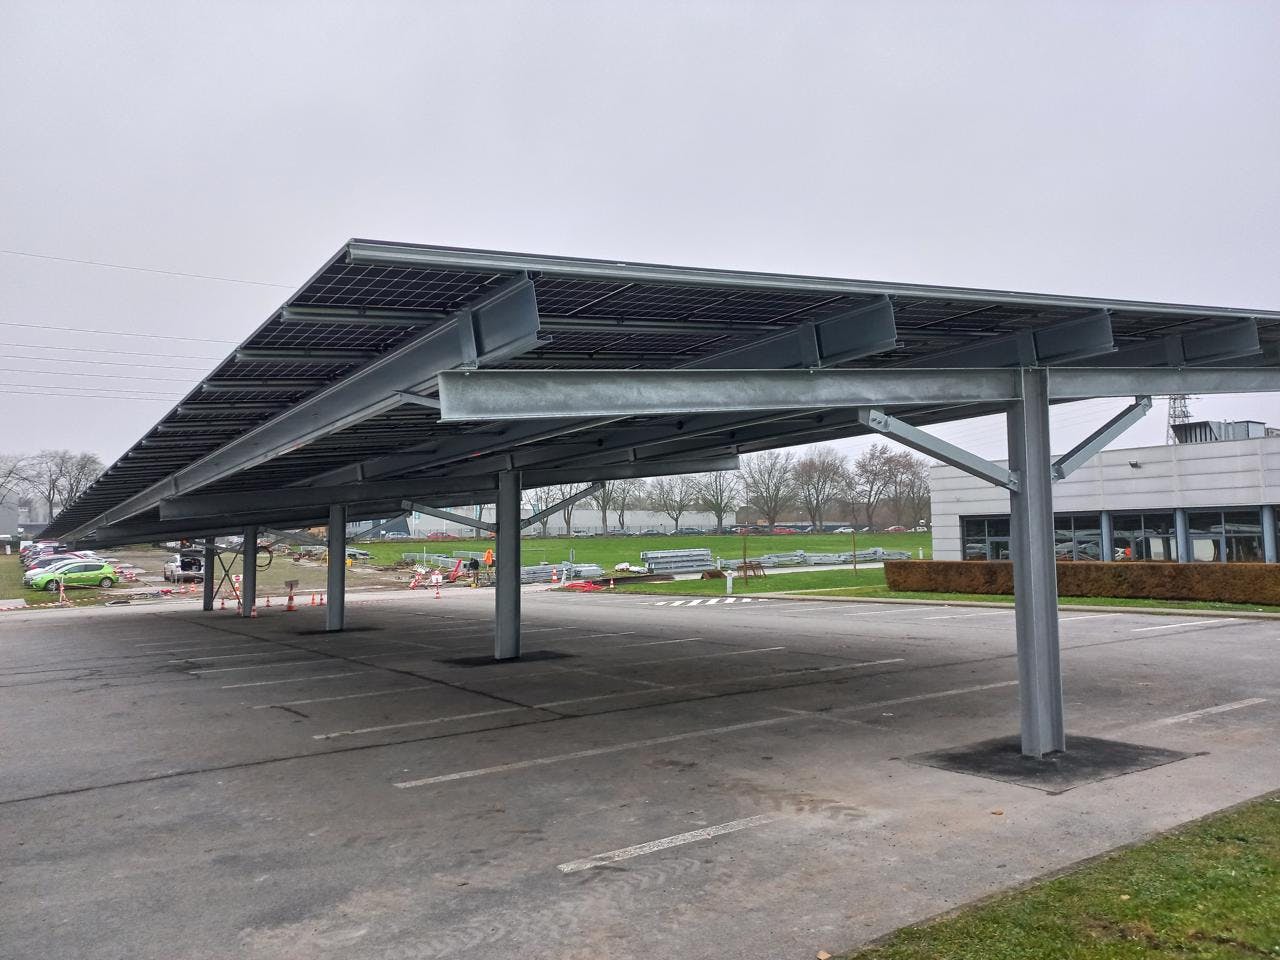 Greenbuddies dokončili 1 MWp solární carport pro Adiwatt v Belgii